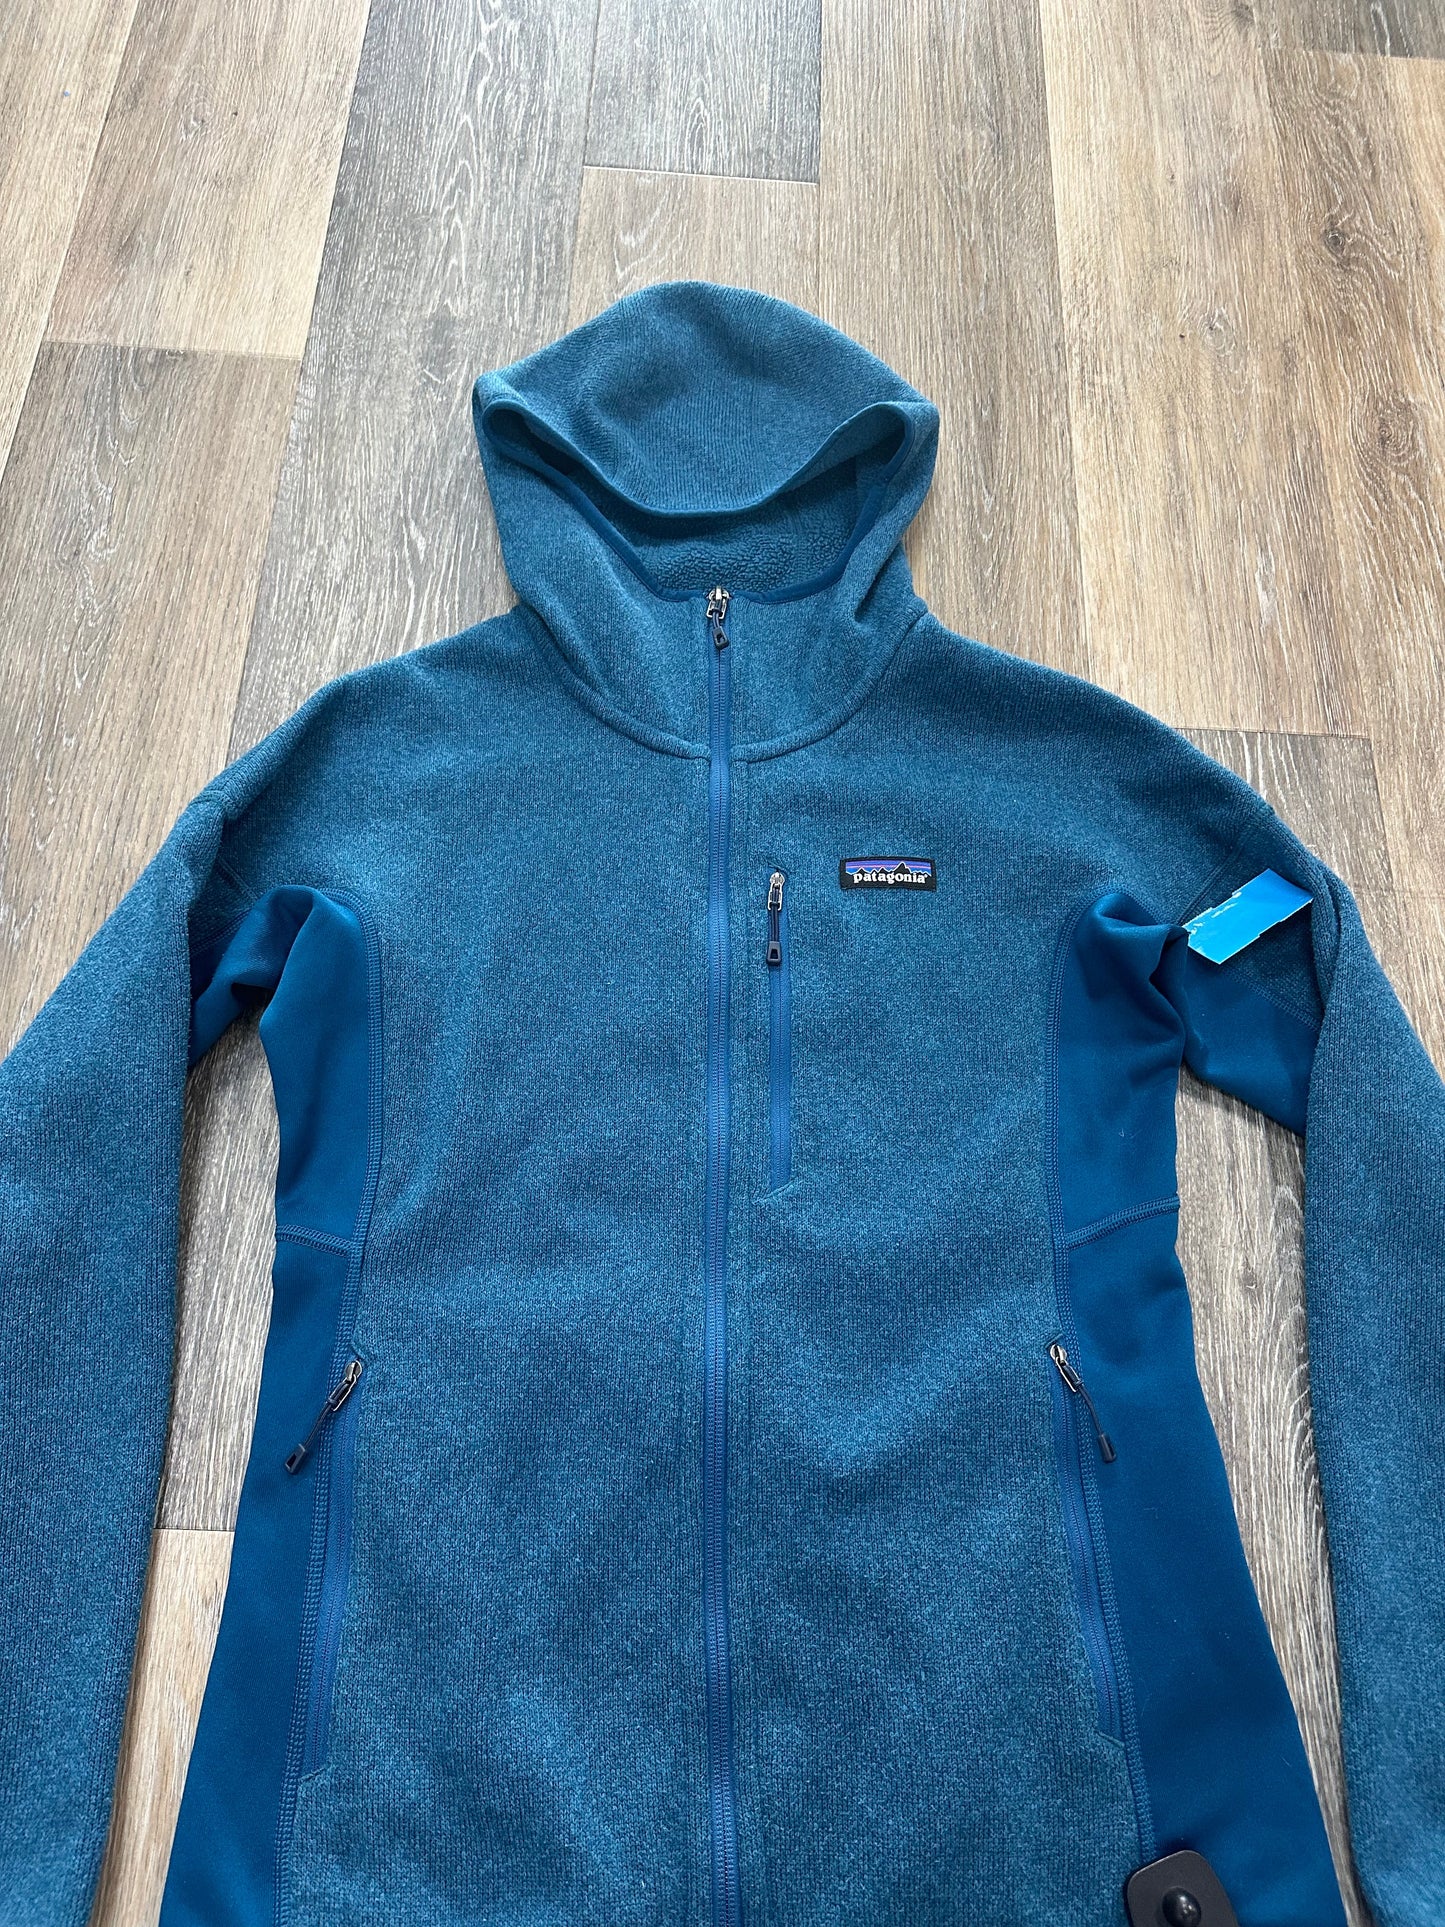 Blue Athletic Jacket Patagonia, Size S